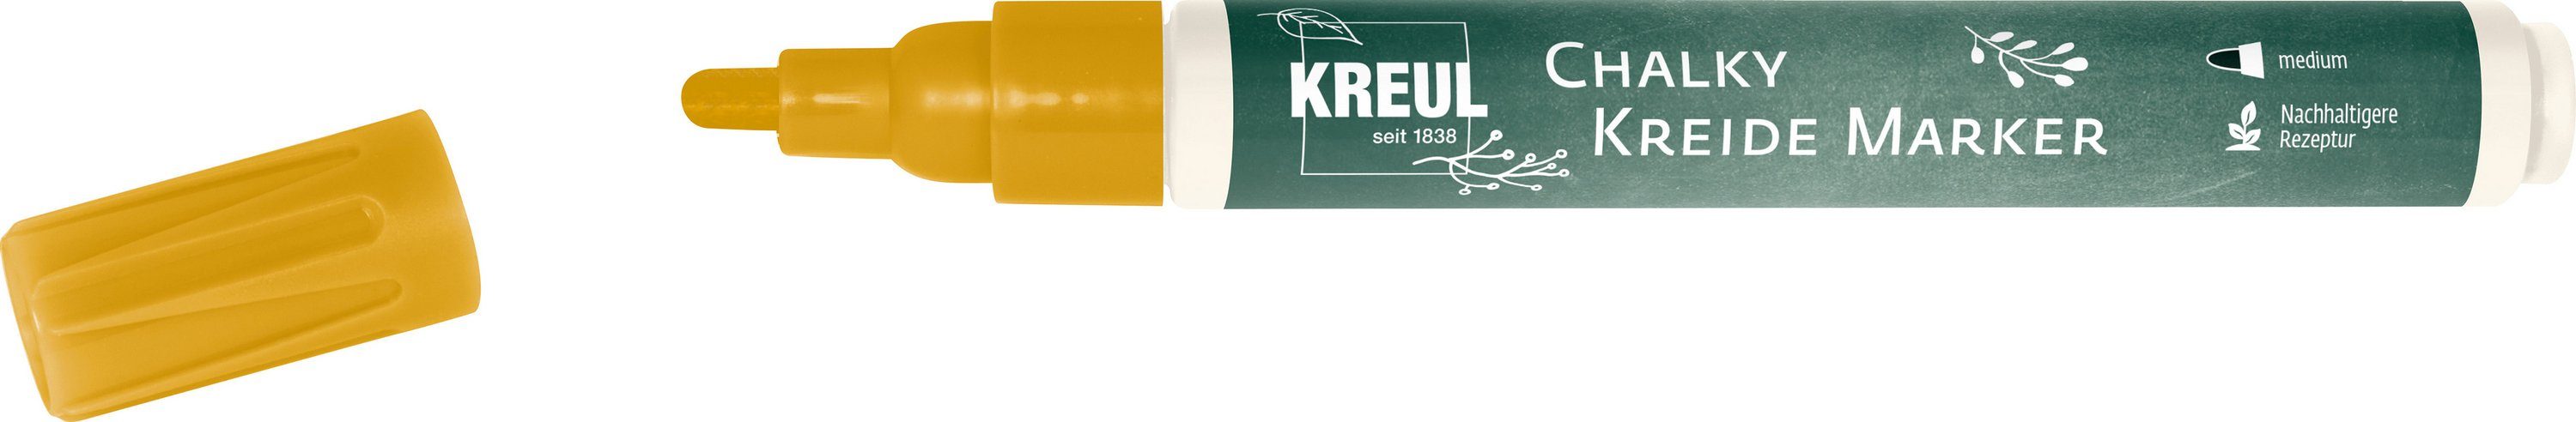 Kreul Kreidemarker Chalky, 2-3mm Strichstärke Golden Glow | Marker